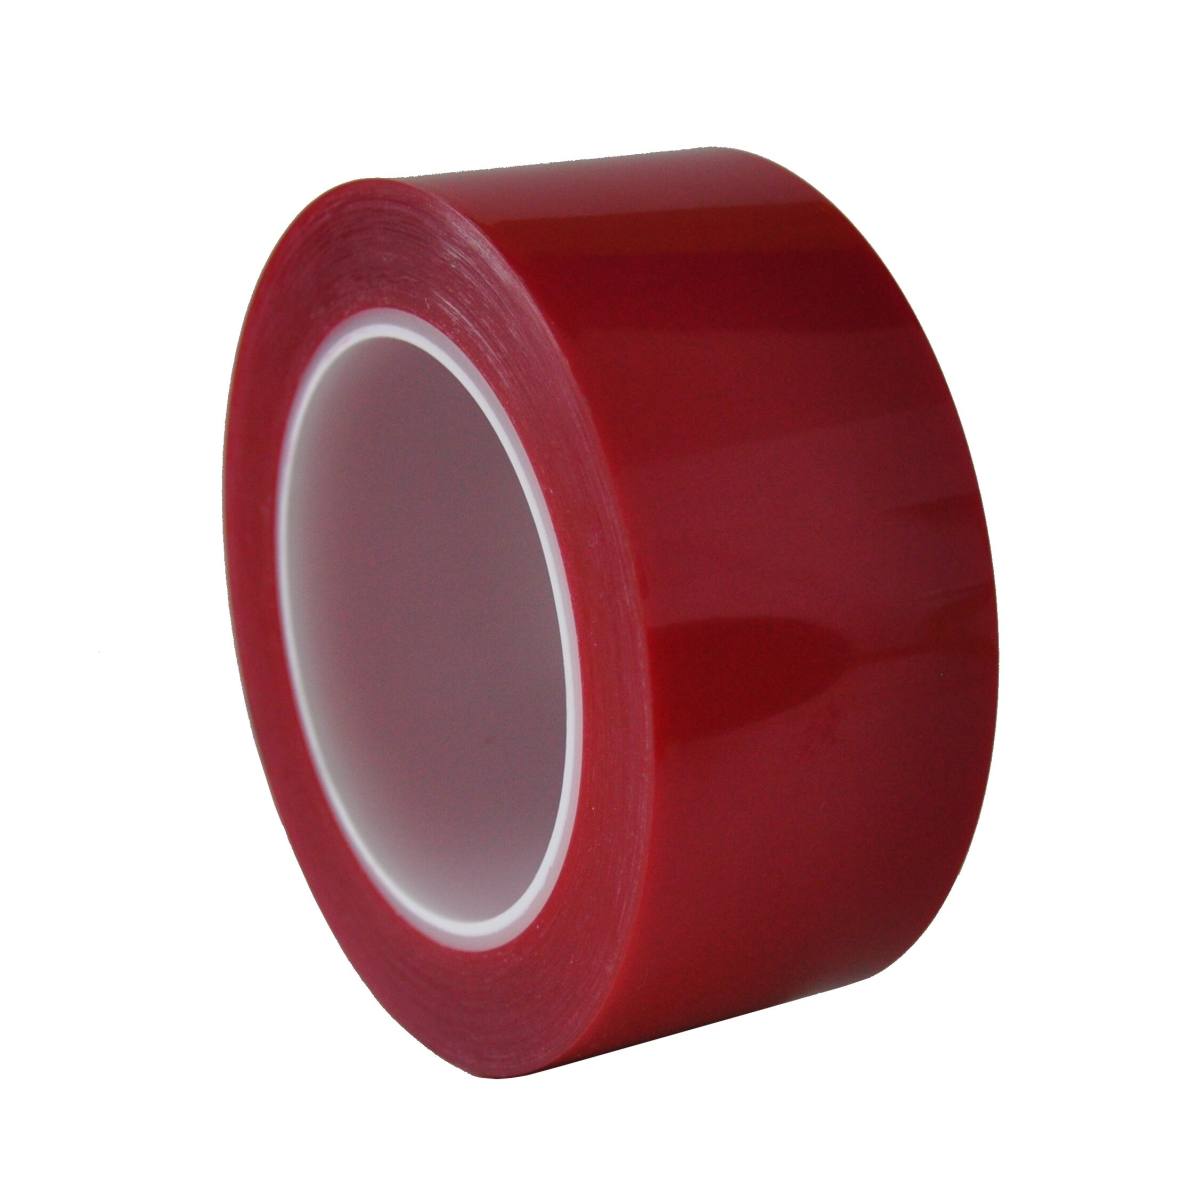 S-K-S 208R ruban adhésif en polyester, 100mmx66m, rouge